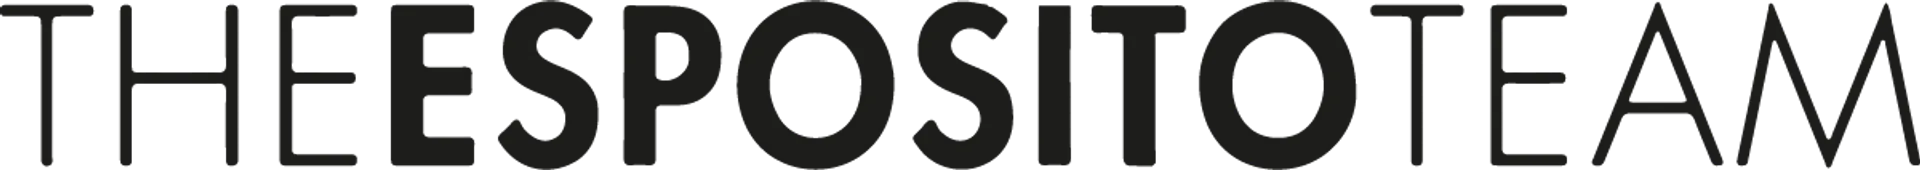 ESPOSITO logo